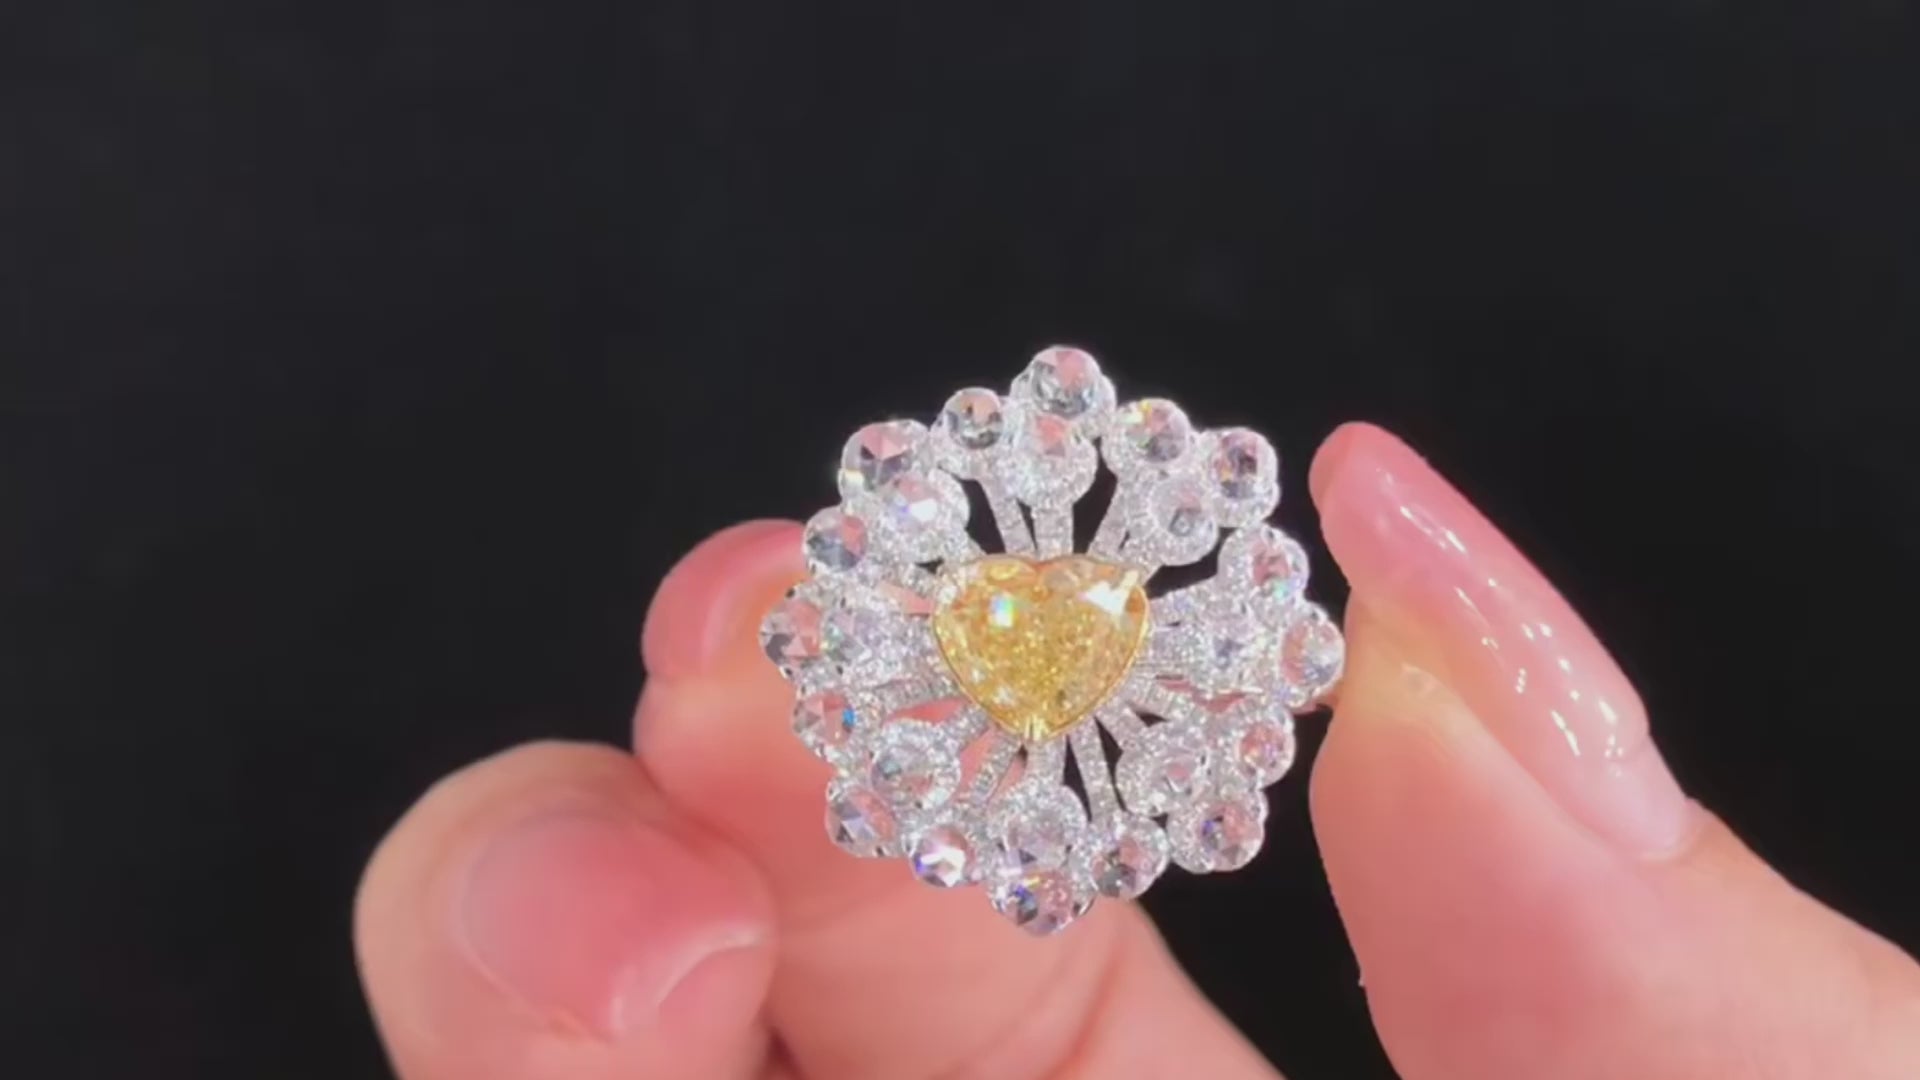 Load video: Yellow Diamond Ring